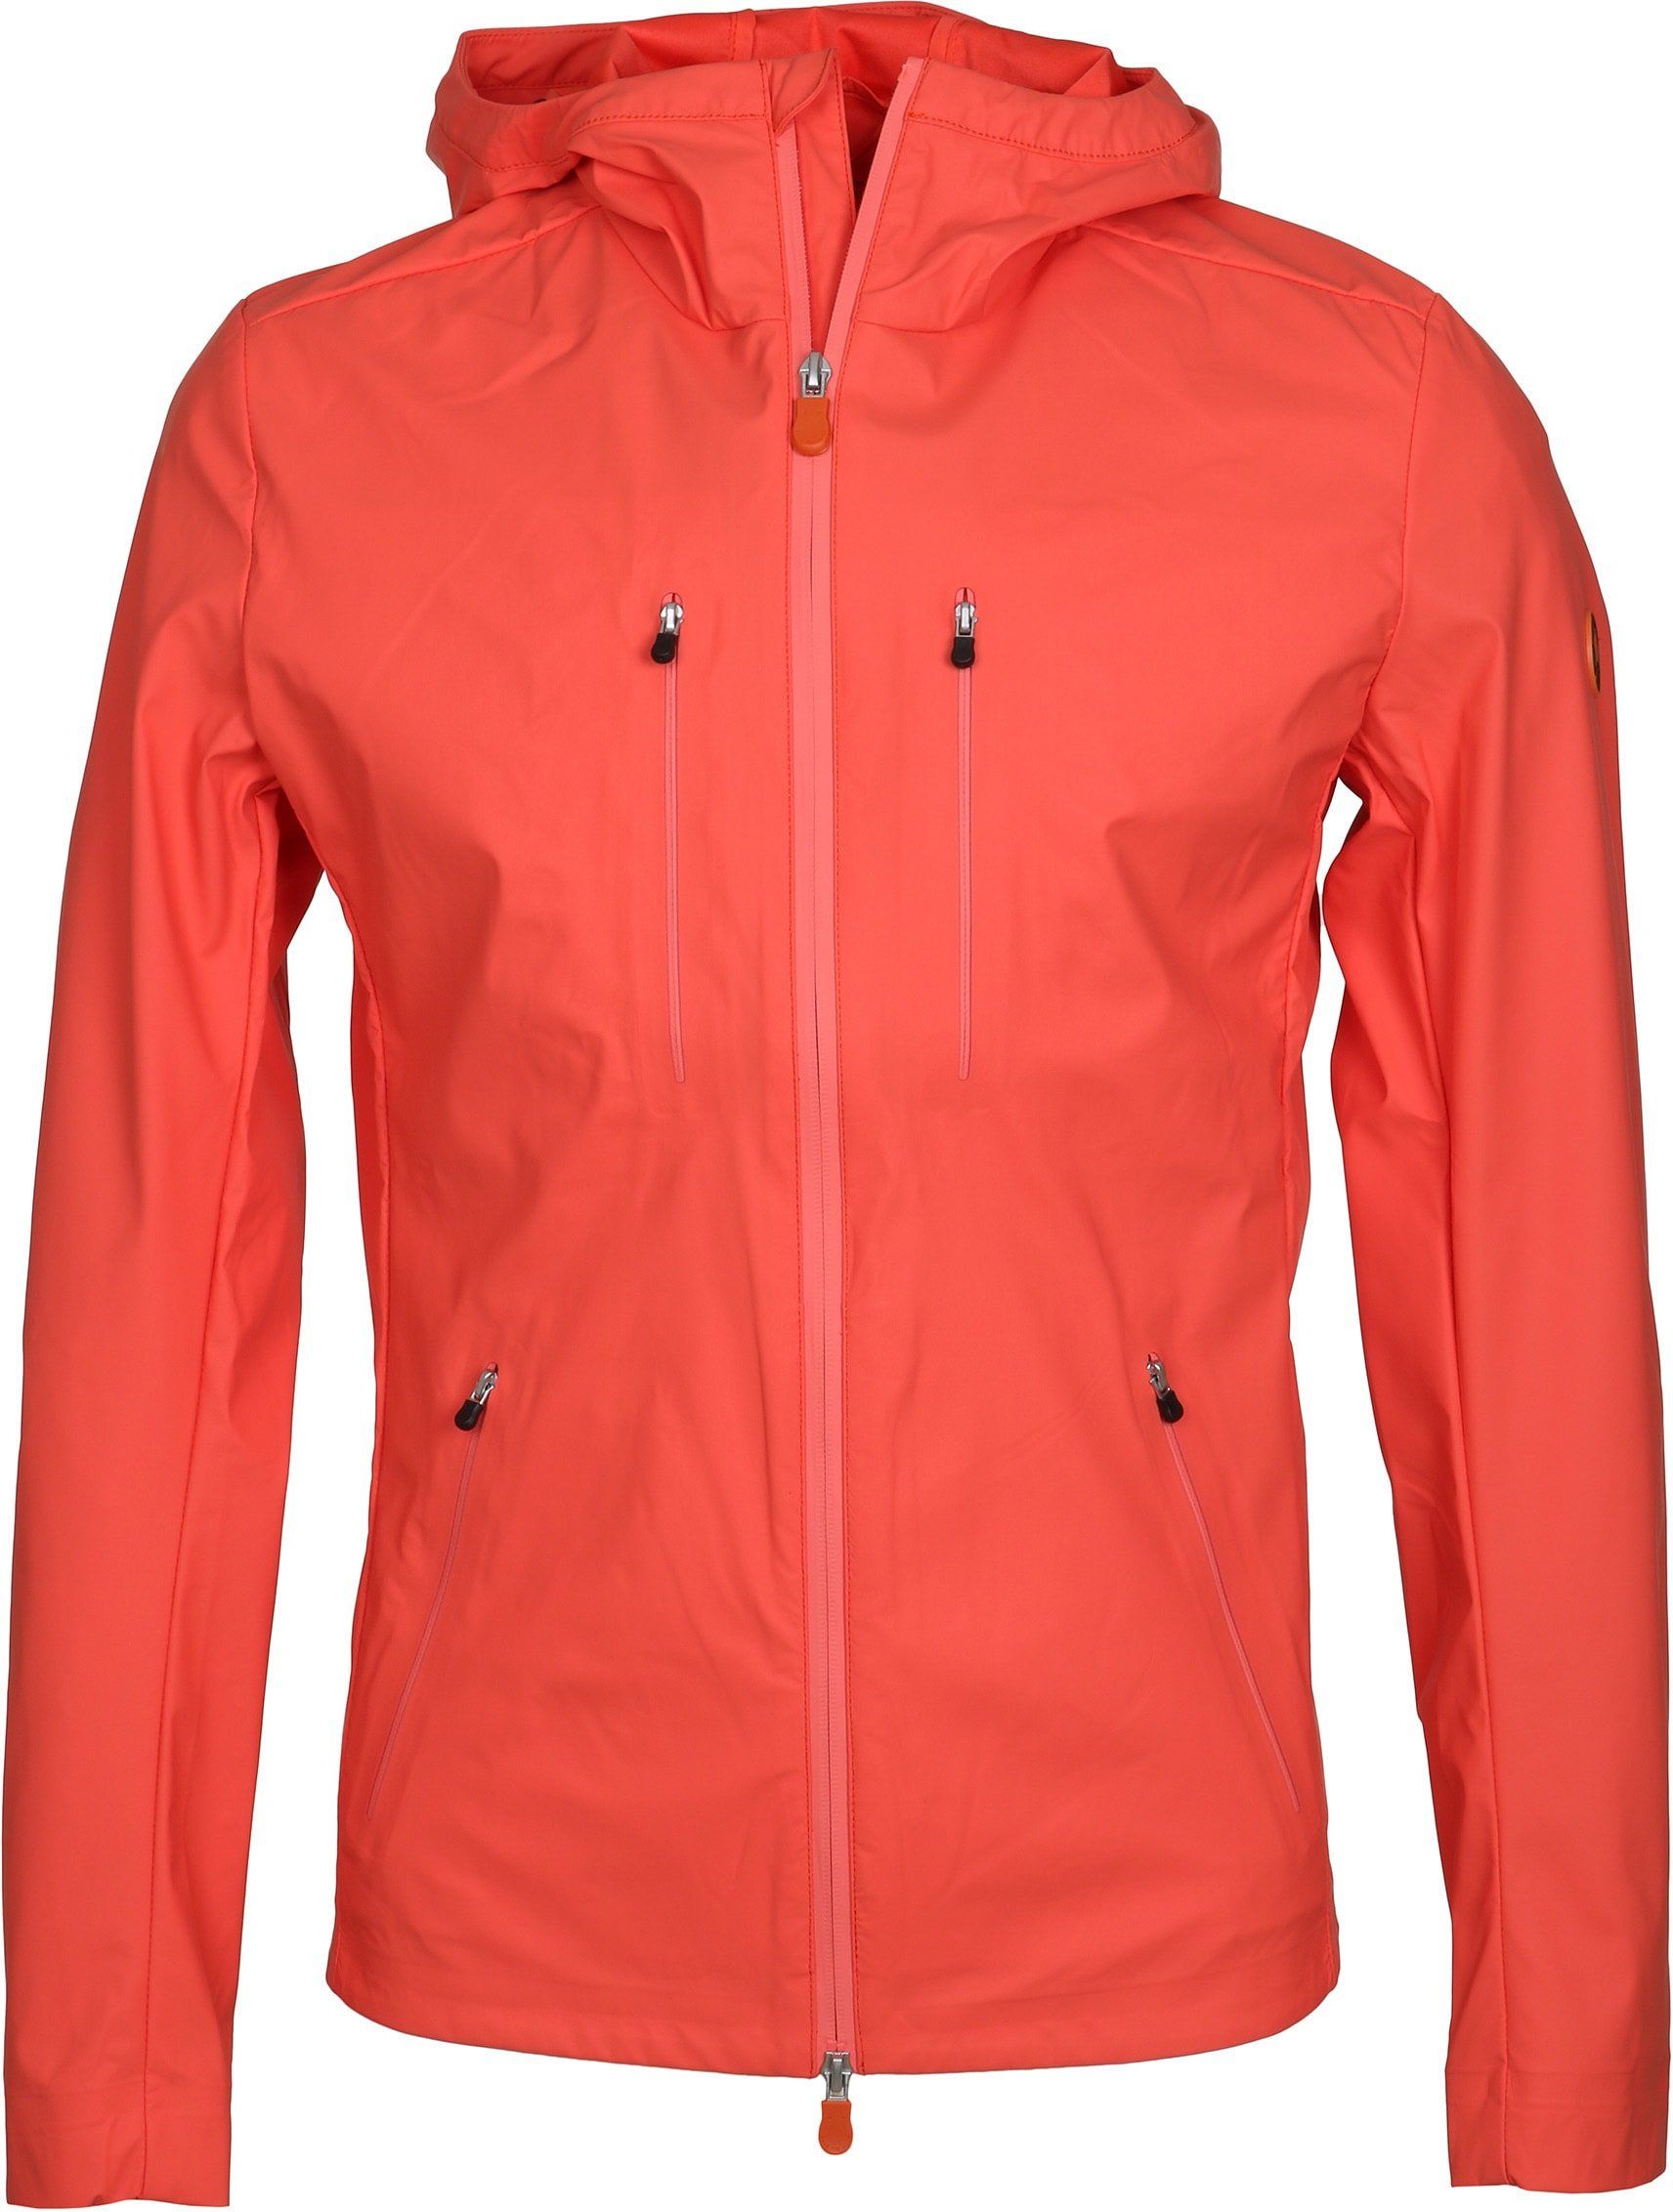 Save the Duck Jacket Rain6 Orange size M